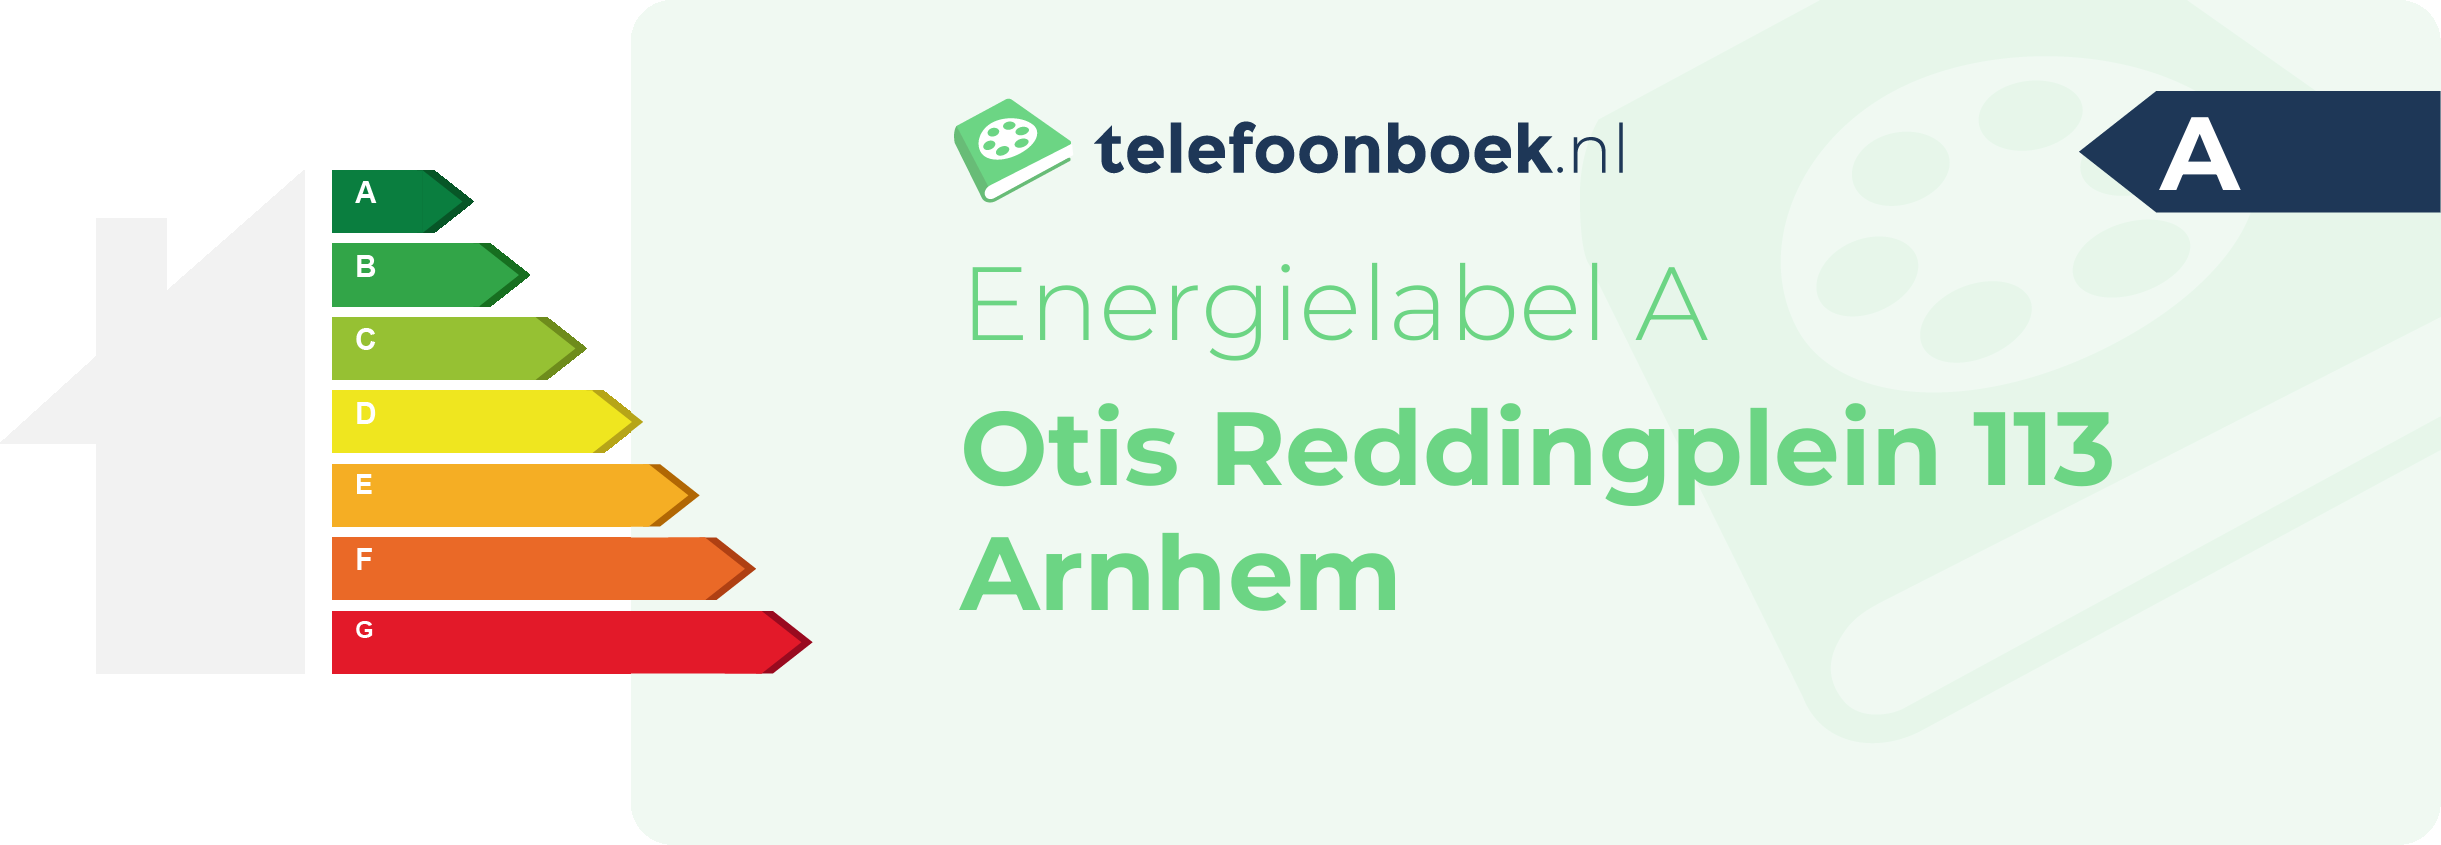 Energielabel Otis Reddingplein 113 Arnhem